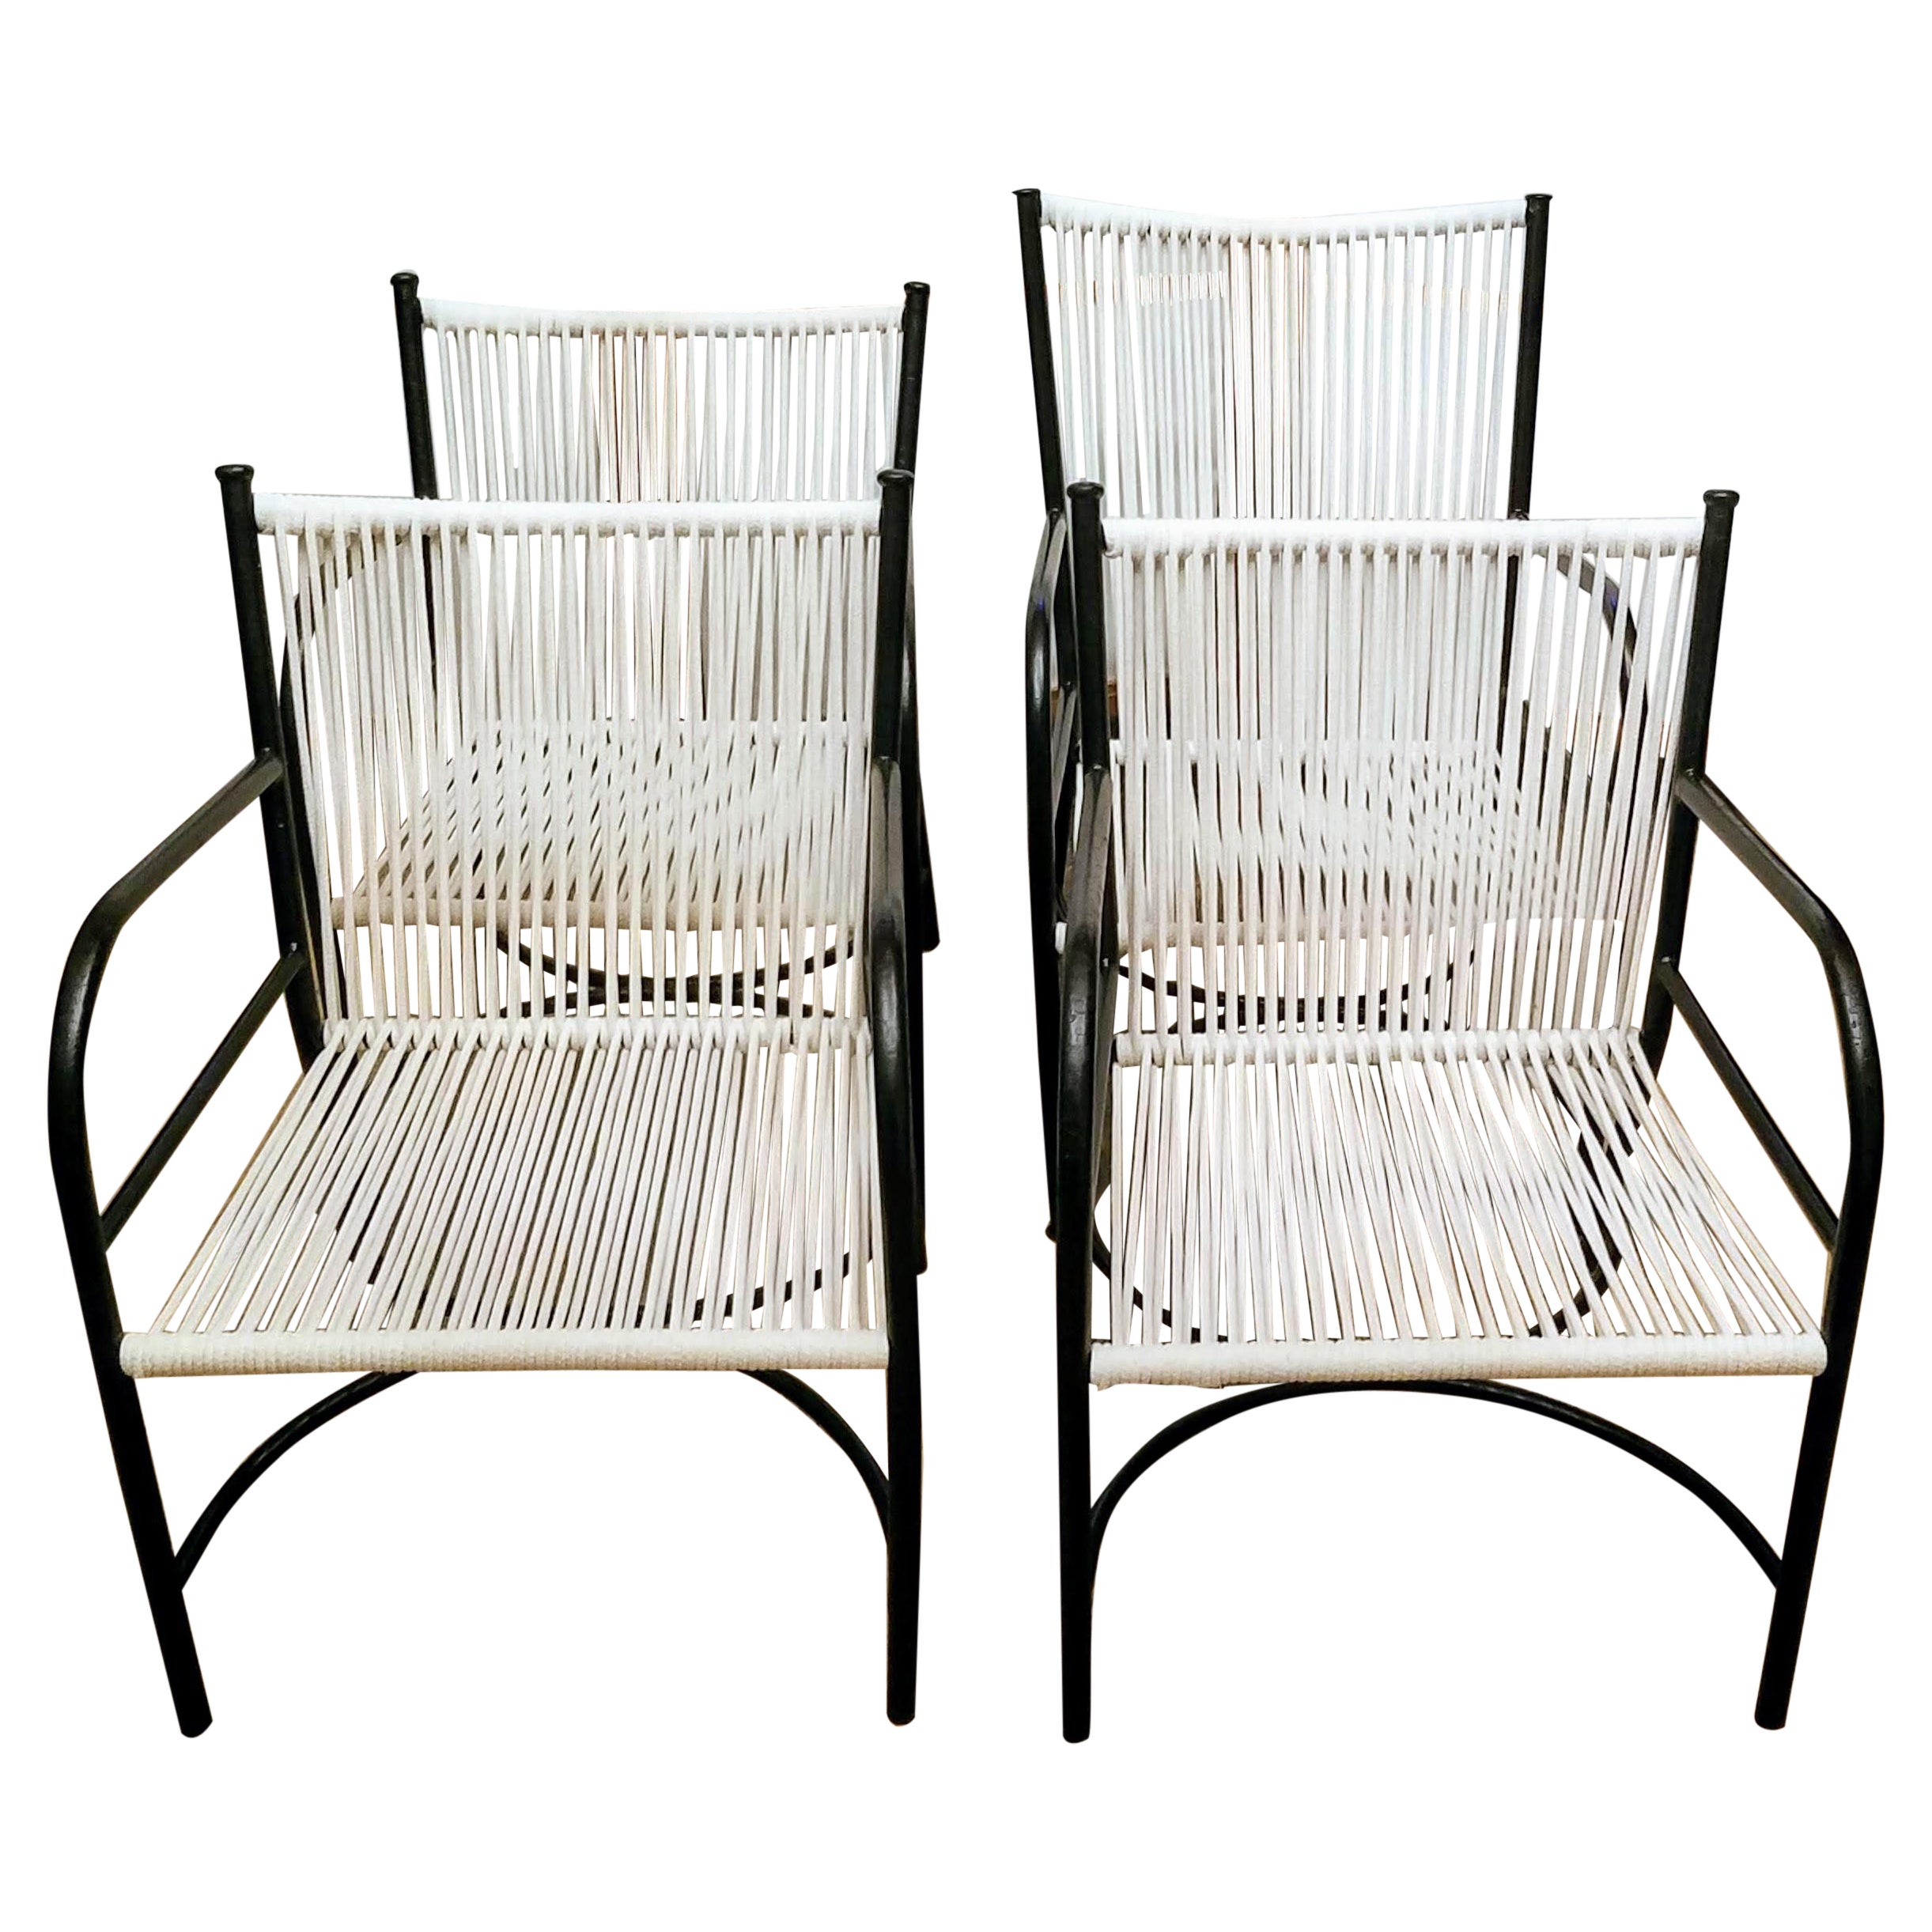 Ensemble de quatre chaises longues Robert Lewis de Studio Crafted Santa Barbara, CA. des années 1940